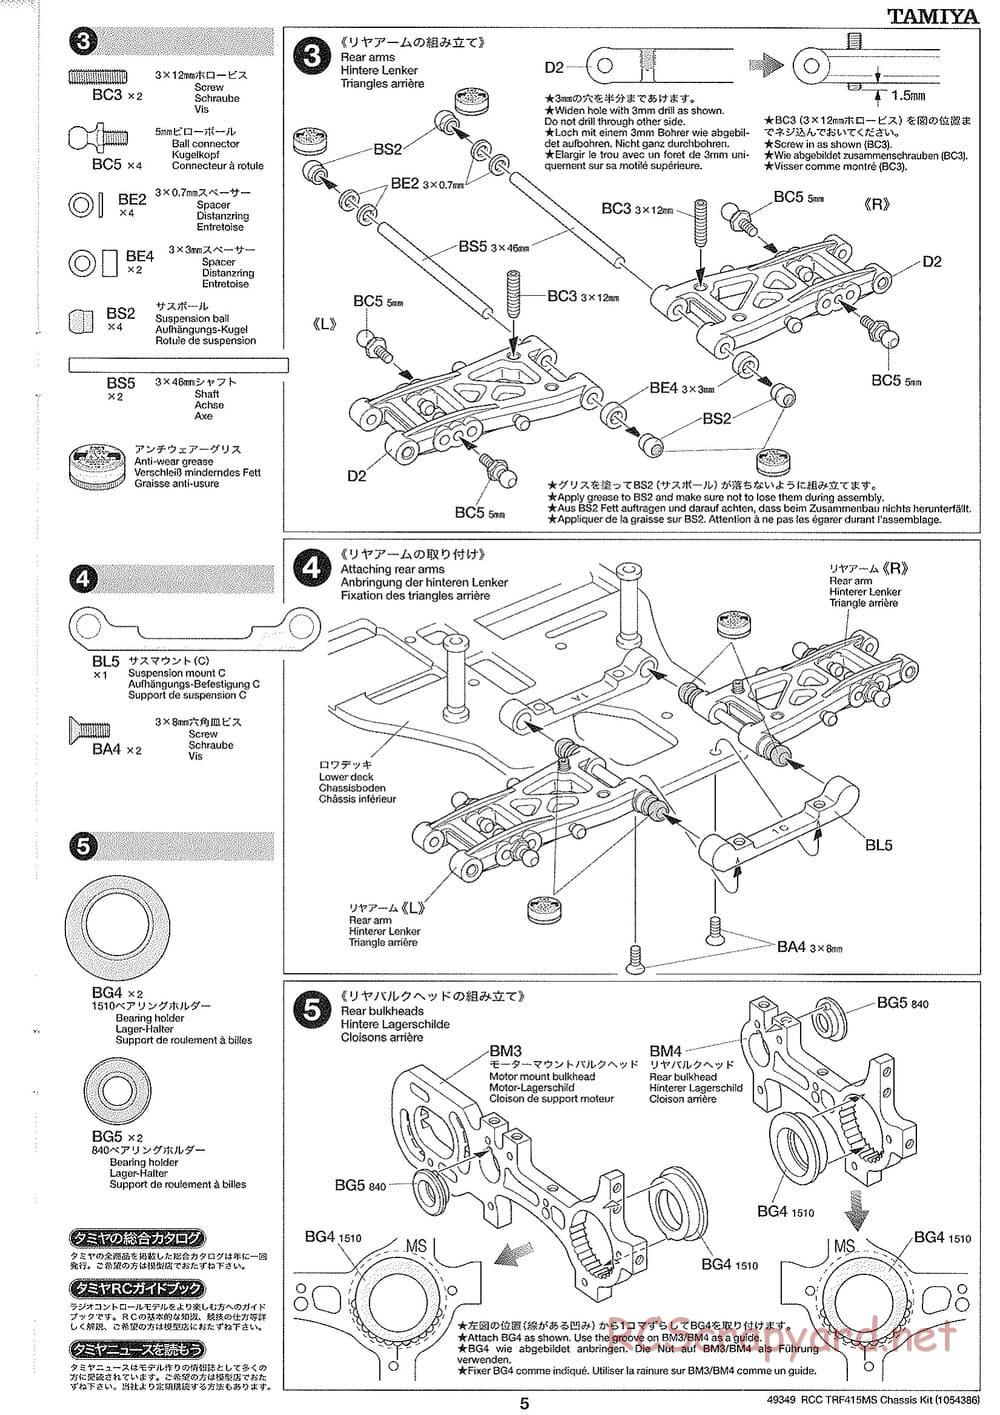 Tamiya - TRF415-MS Chassis - Manual - Page 5